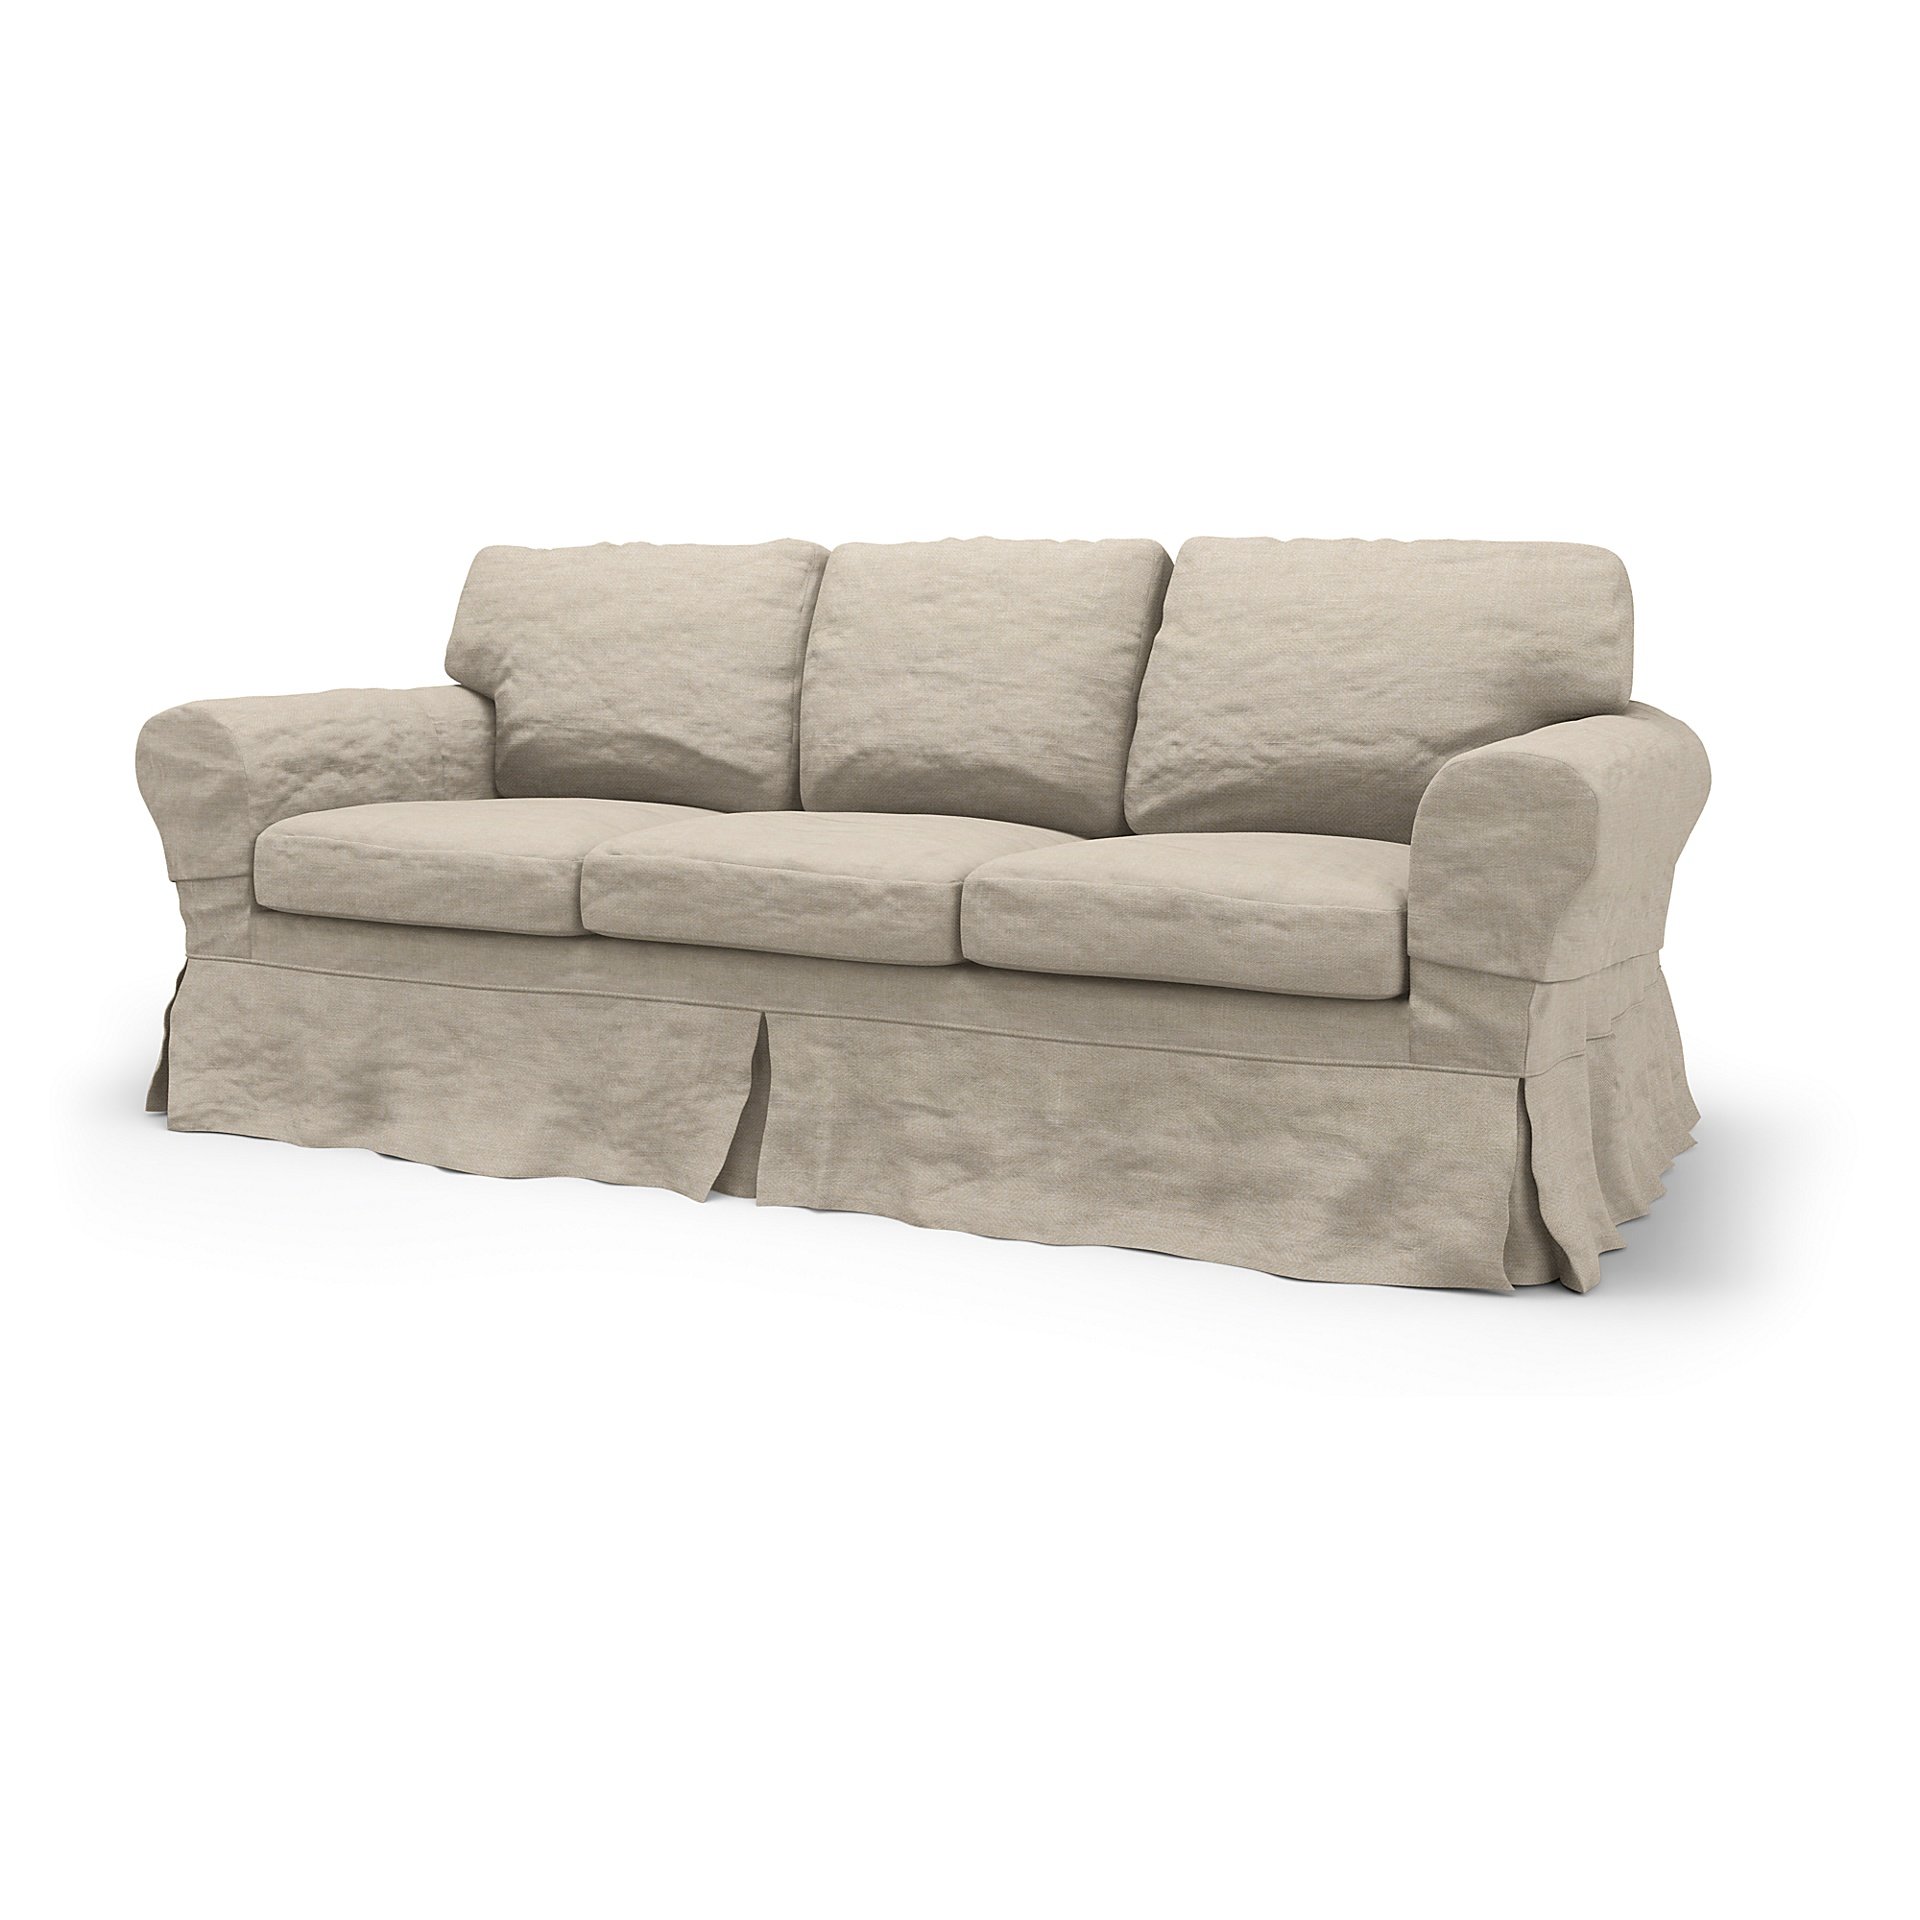 IKEA - Ektorp 3 Seater Sofa Bed Cover, Natural, Boucle & Texture - Bemz